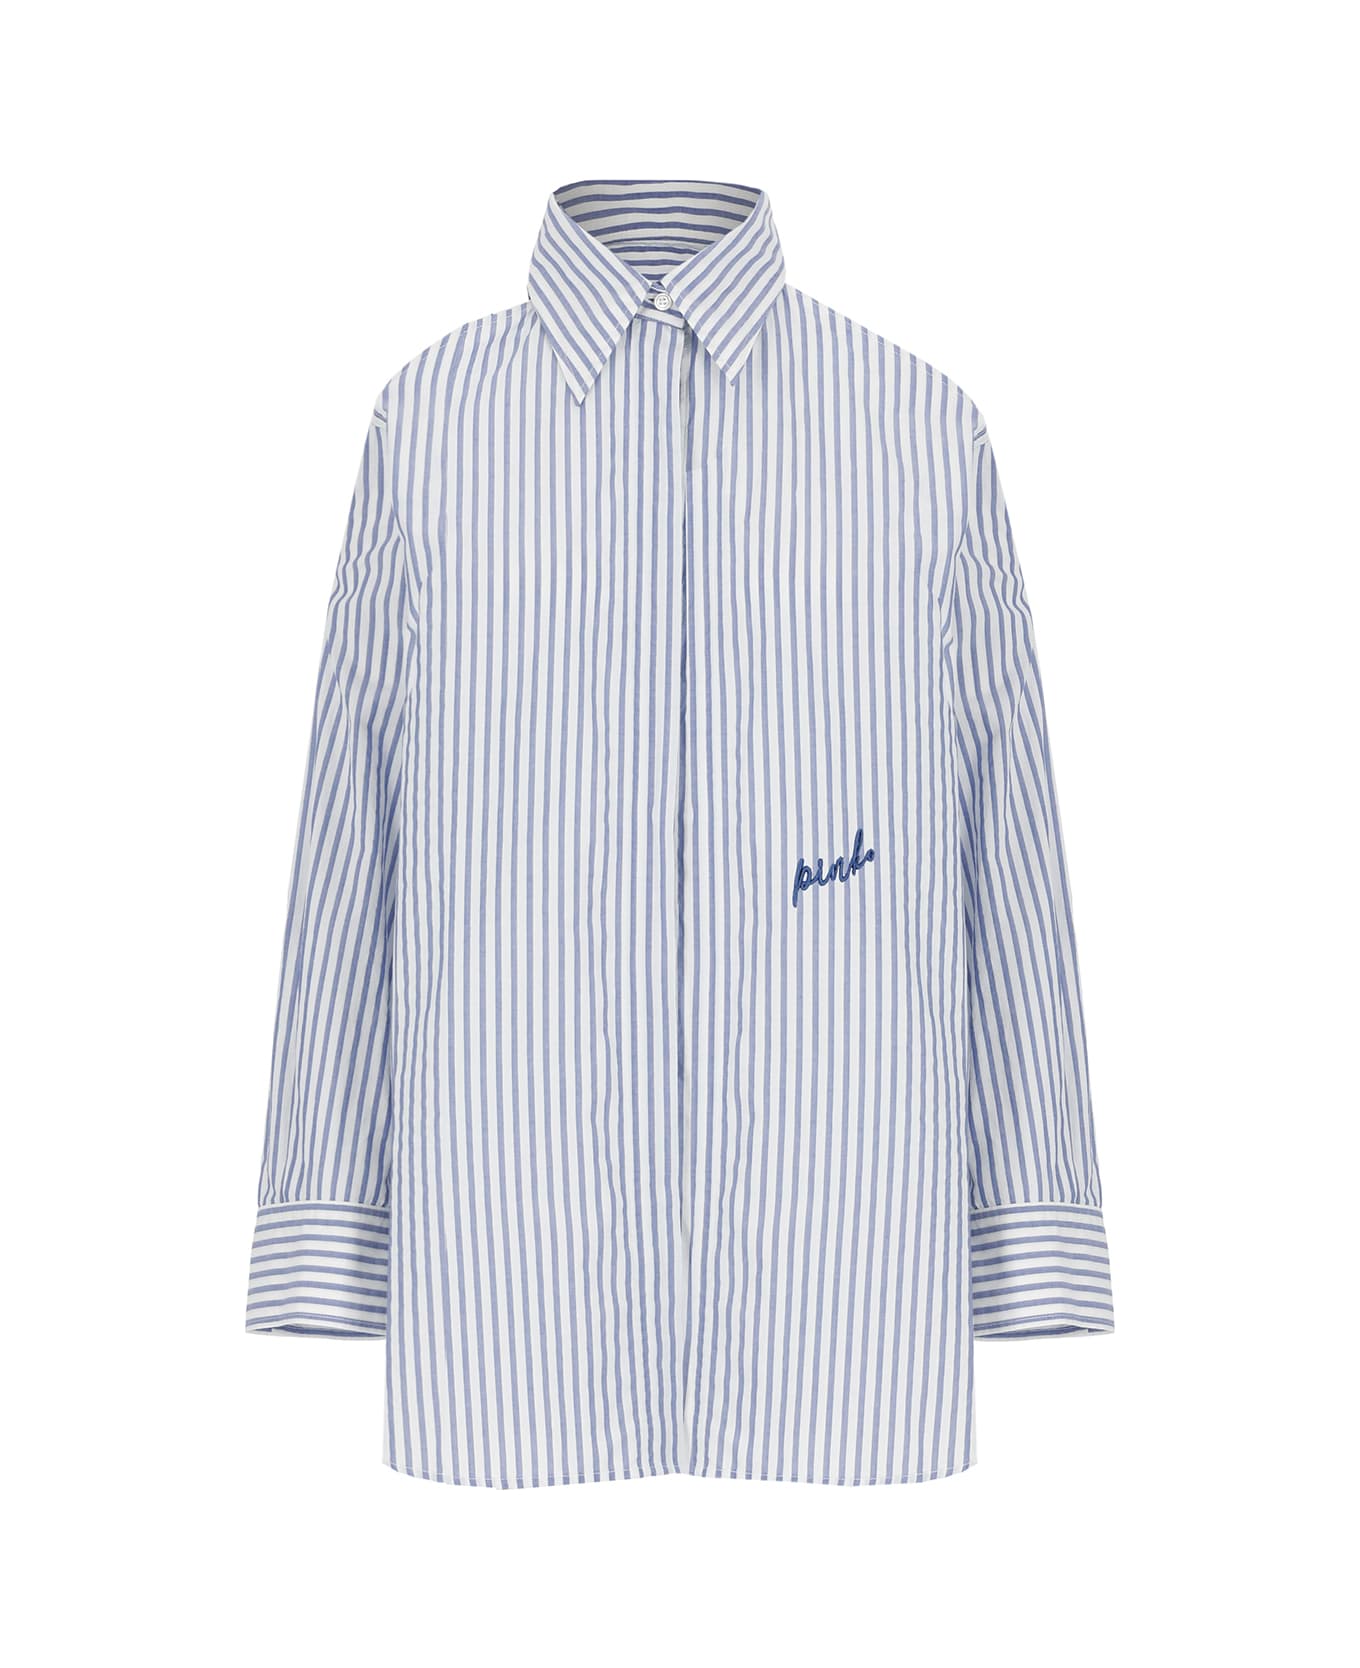 Pinko Canterno Striped Shirt - Light Blue シャツ